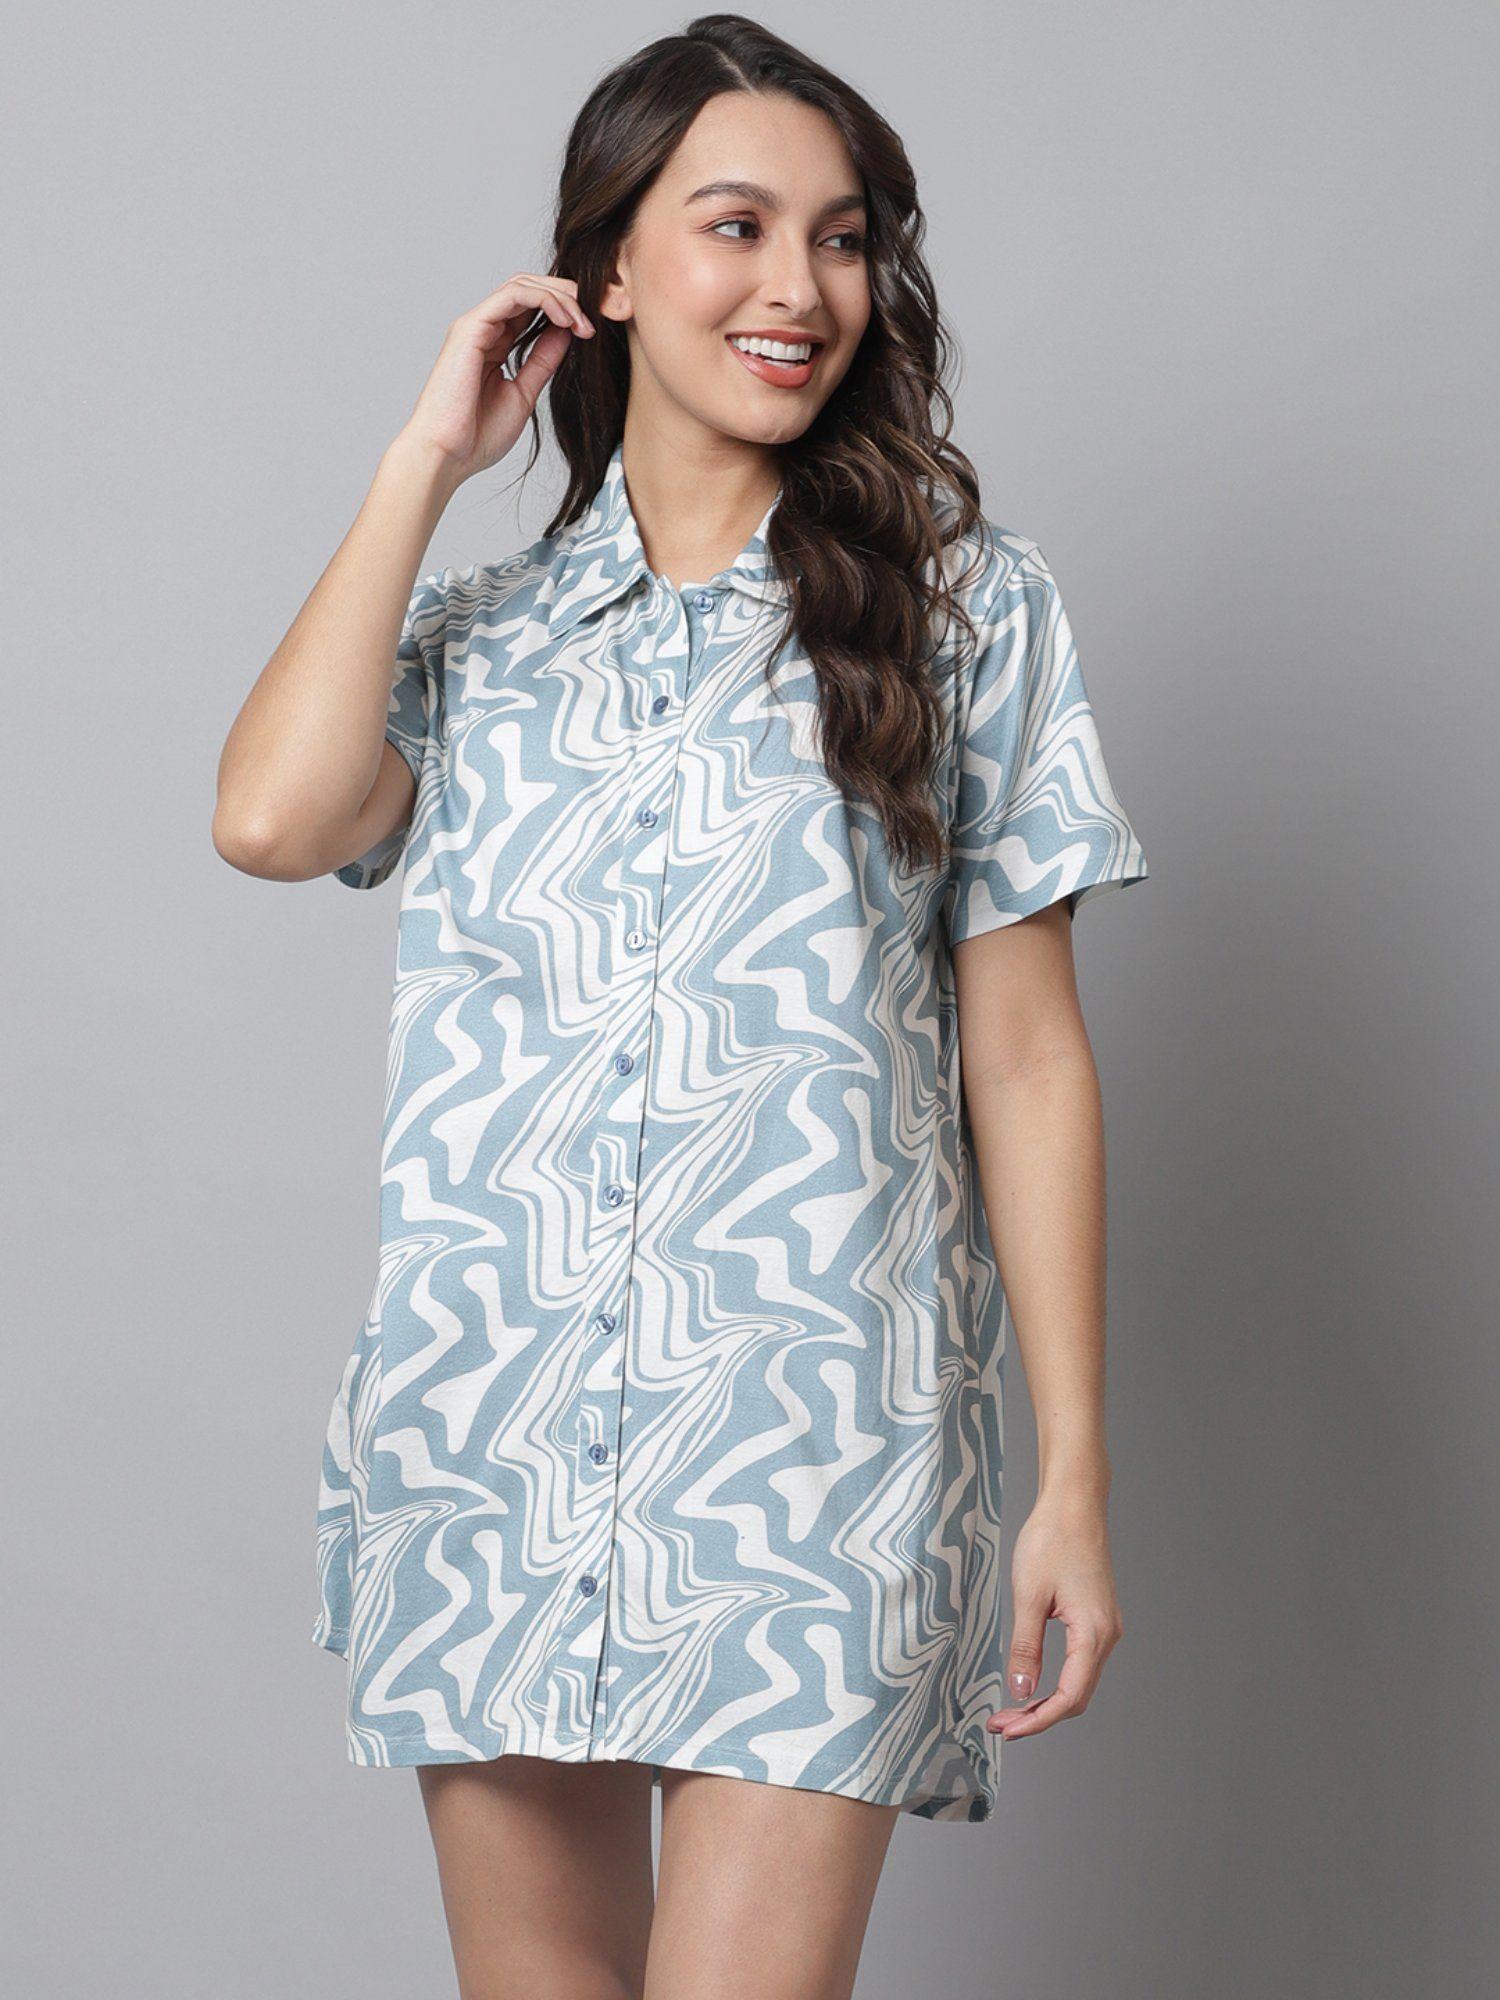 abstract printed shirt nightdress